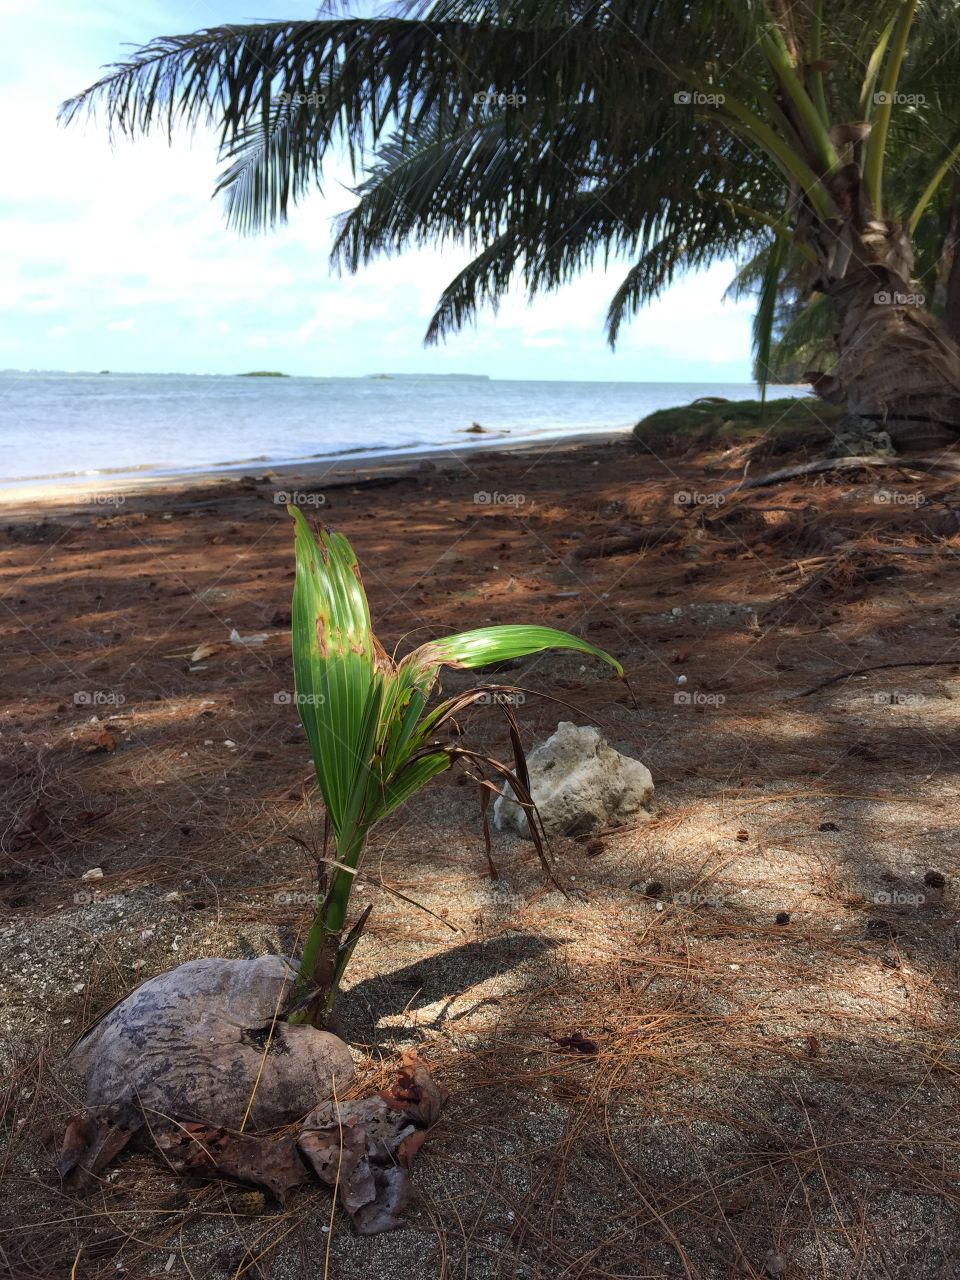 Coconut beach Guam . Baby coconut growing on beach in Guam 